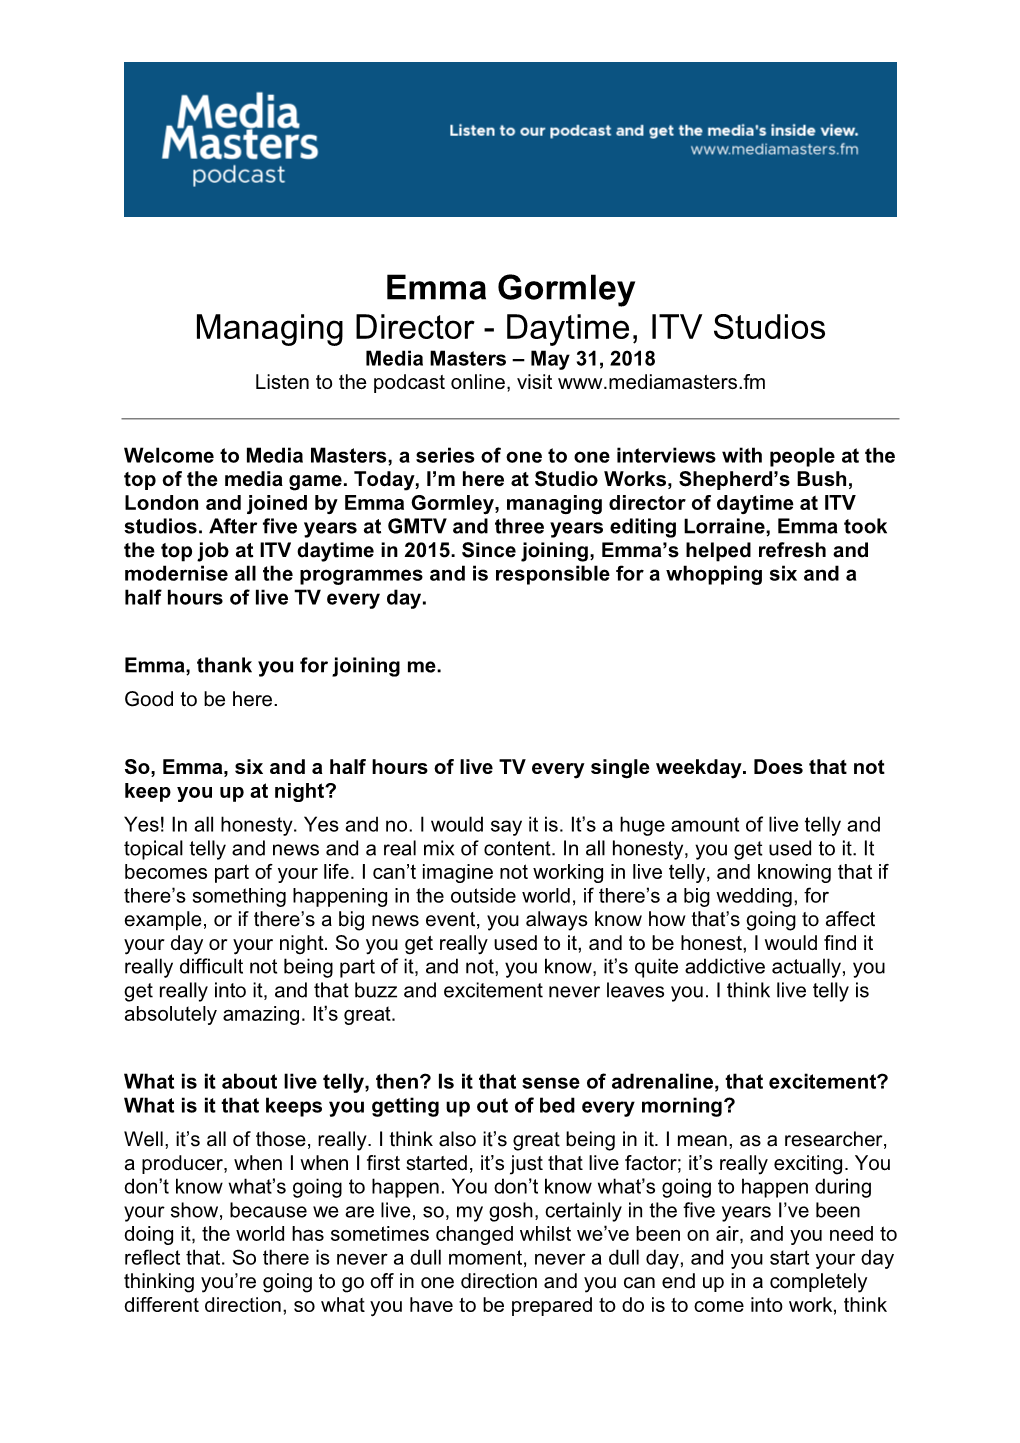 Emma Gormley Managing Director - Daytime, ITV Studios Media Masters – May 31, 2018 Listen to the Podcast Online, Visit